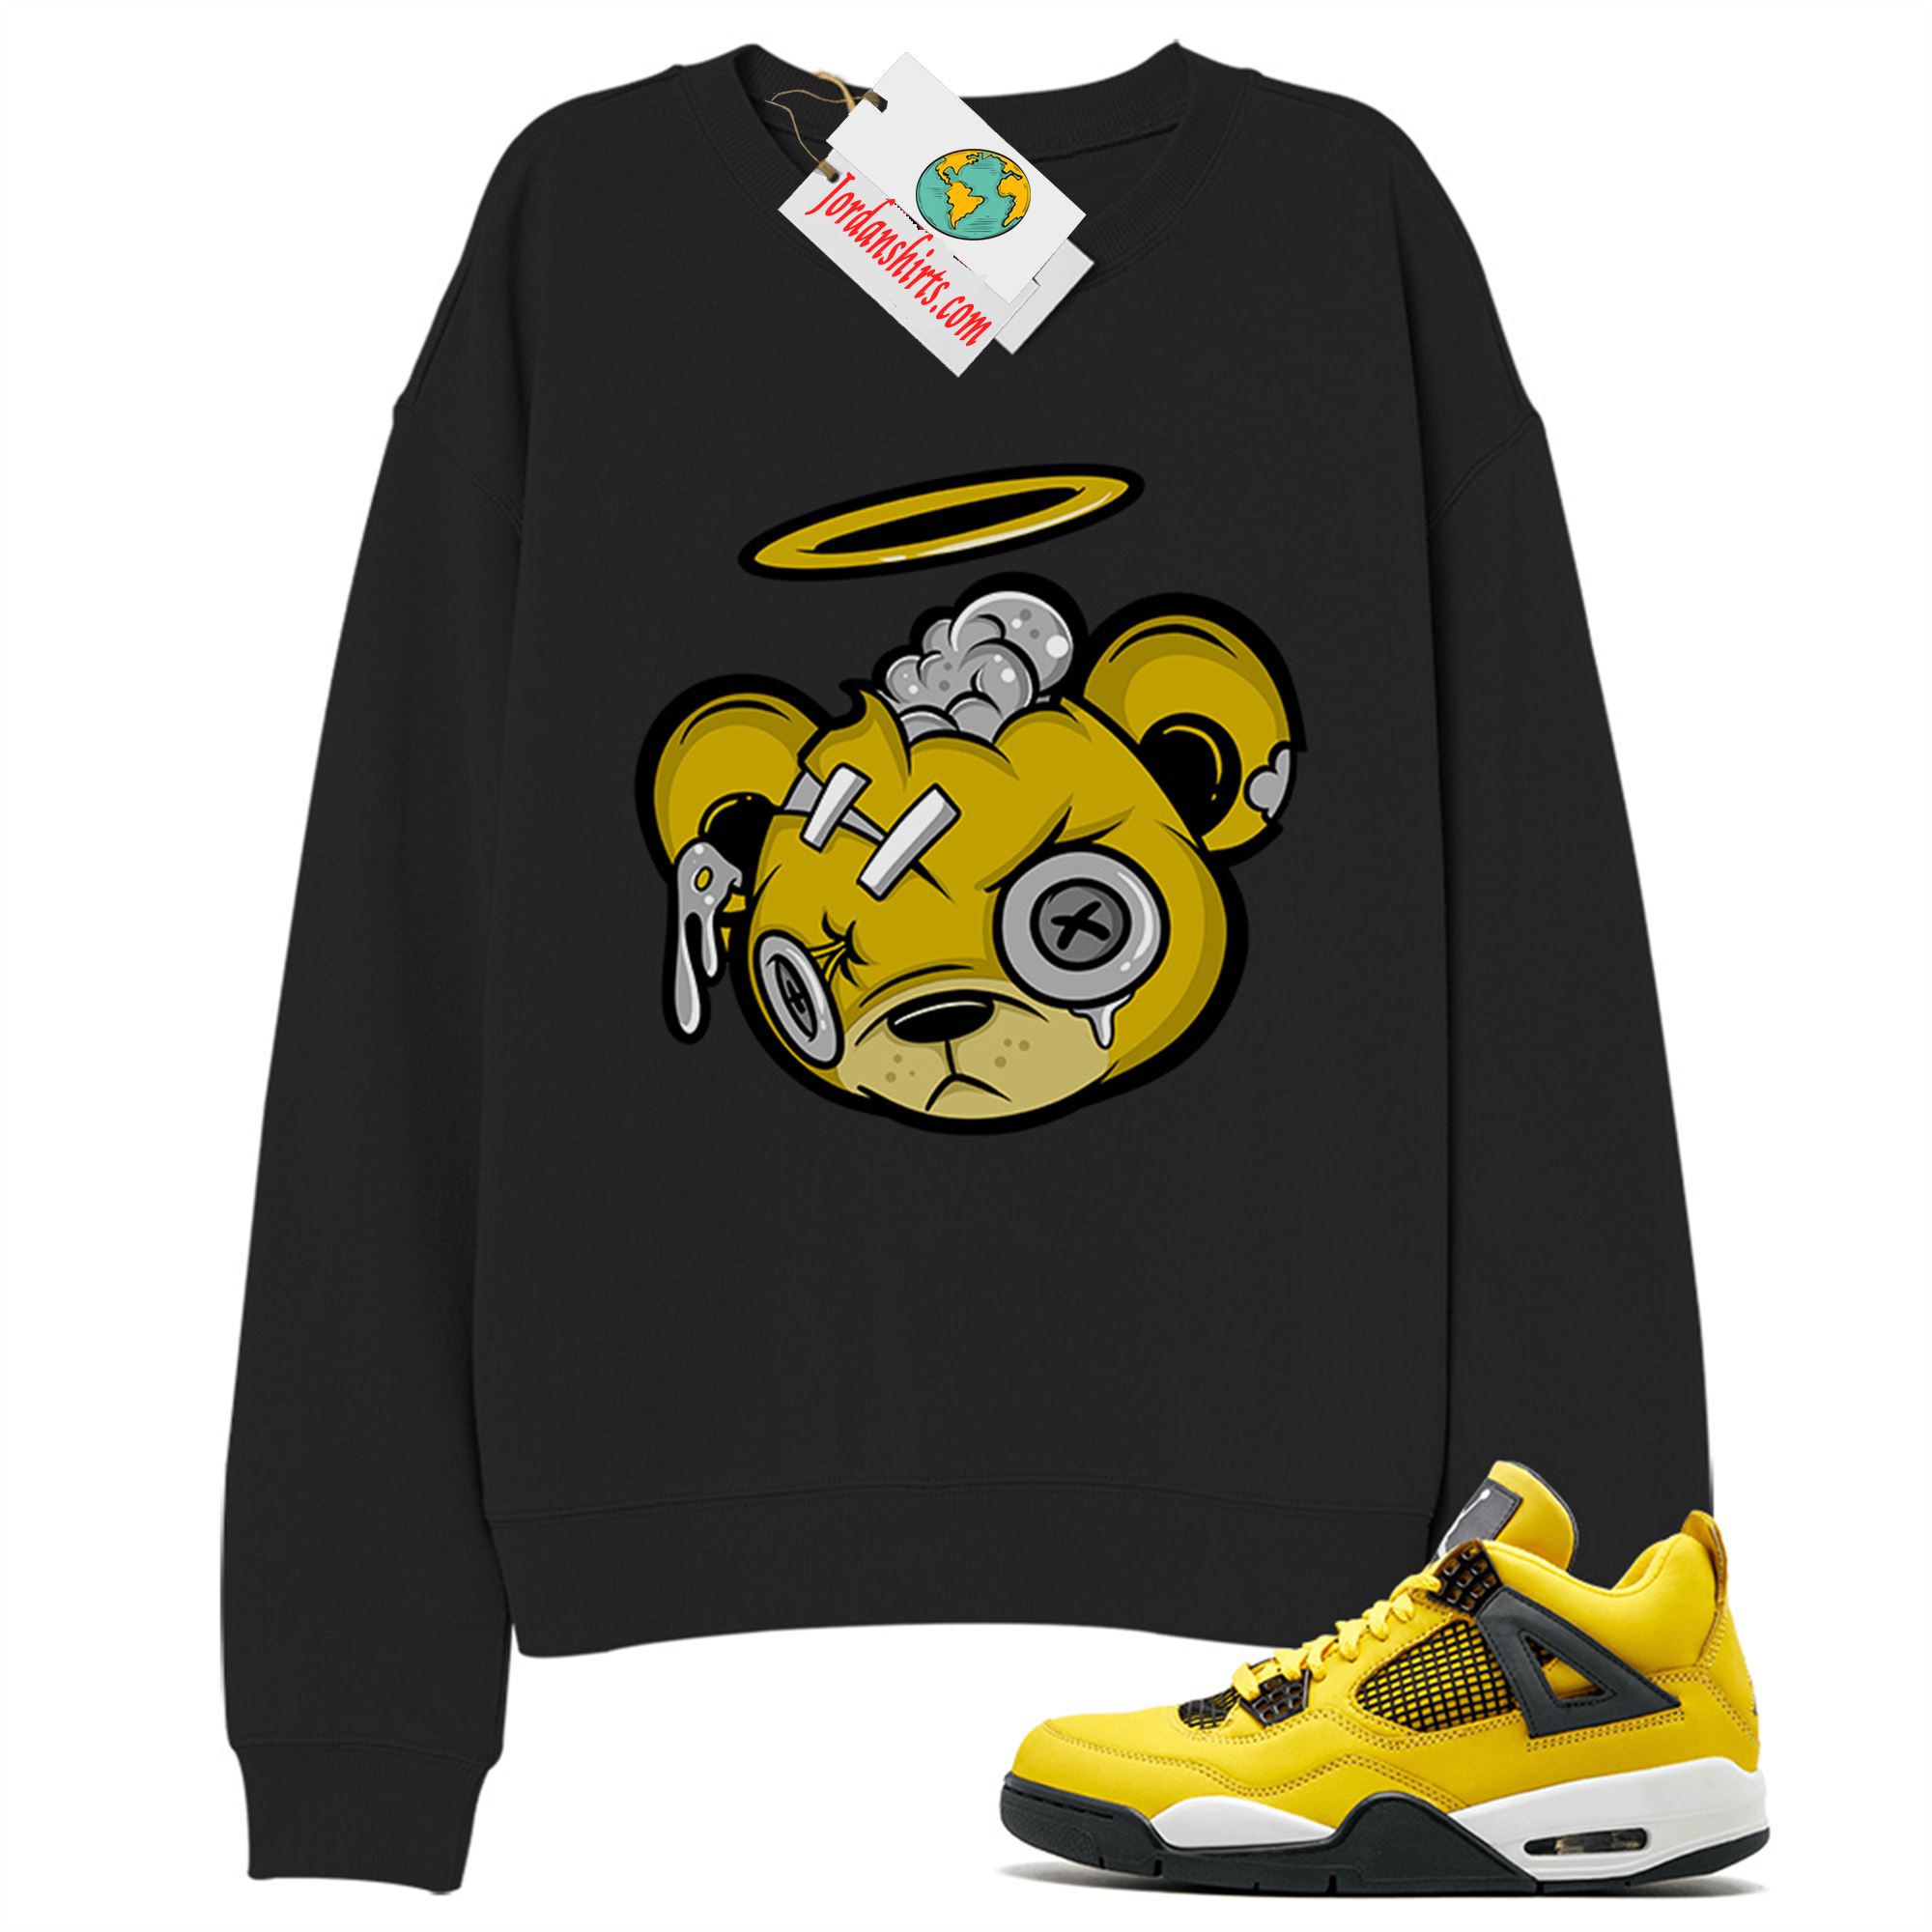 Jordan 4 Sweatshirt, Teddy Bear With Angel Ring Black Sweatshirt Air Jordan 4 Tour Yellowlightning 4s Size Up To 5xl